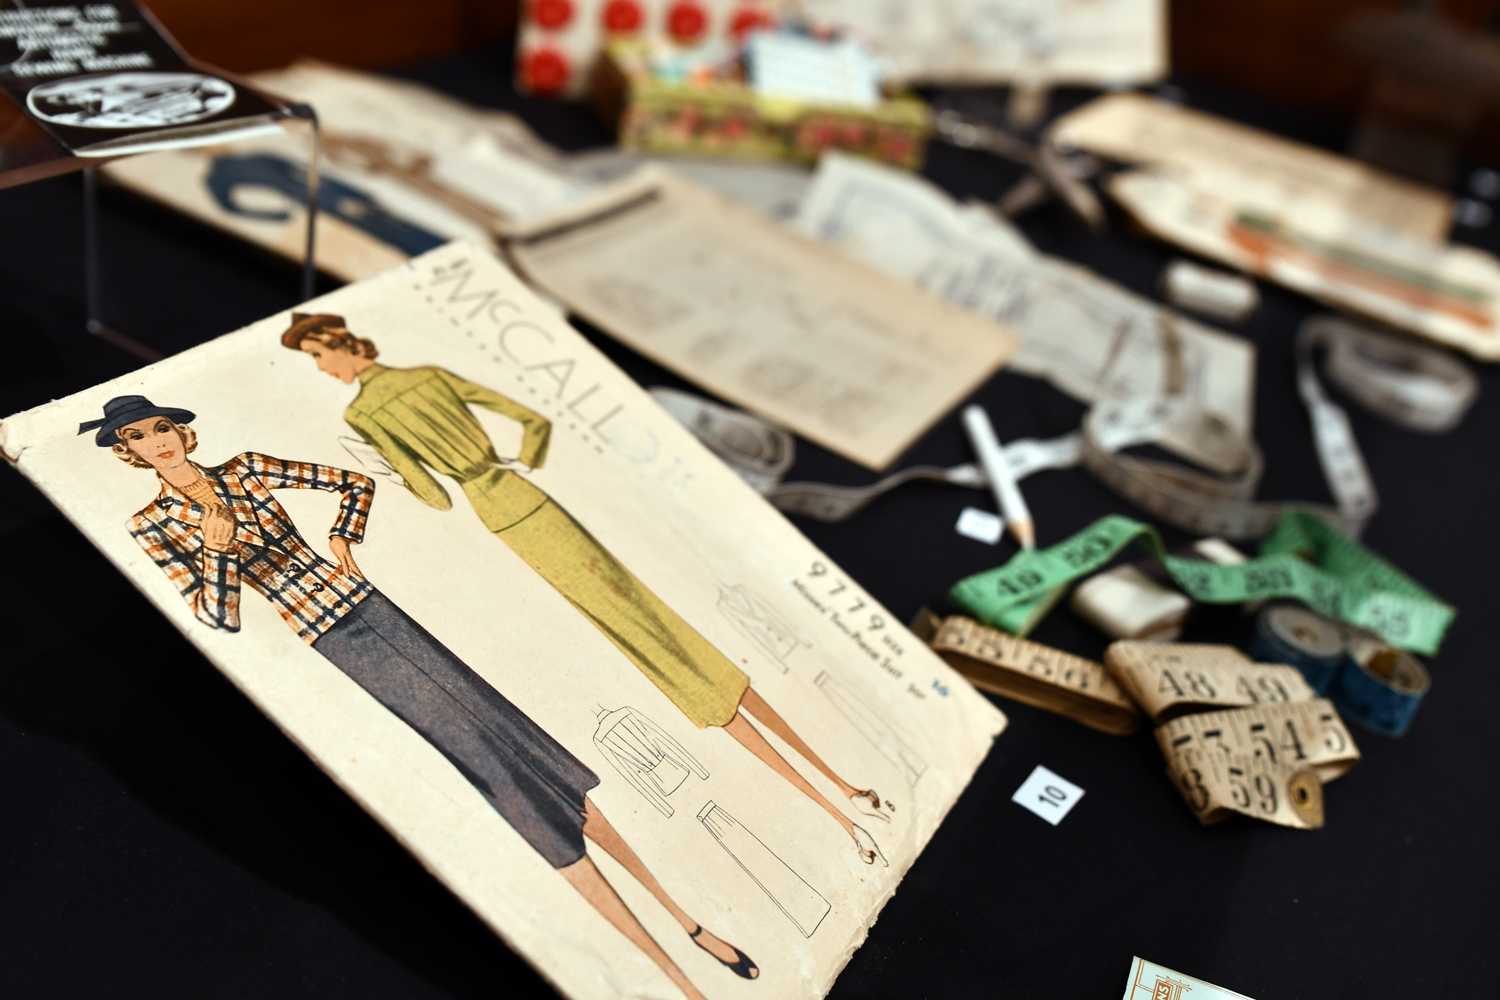 Museum dressmaking exhibition